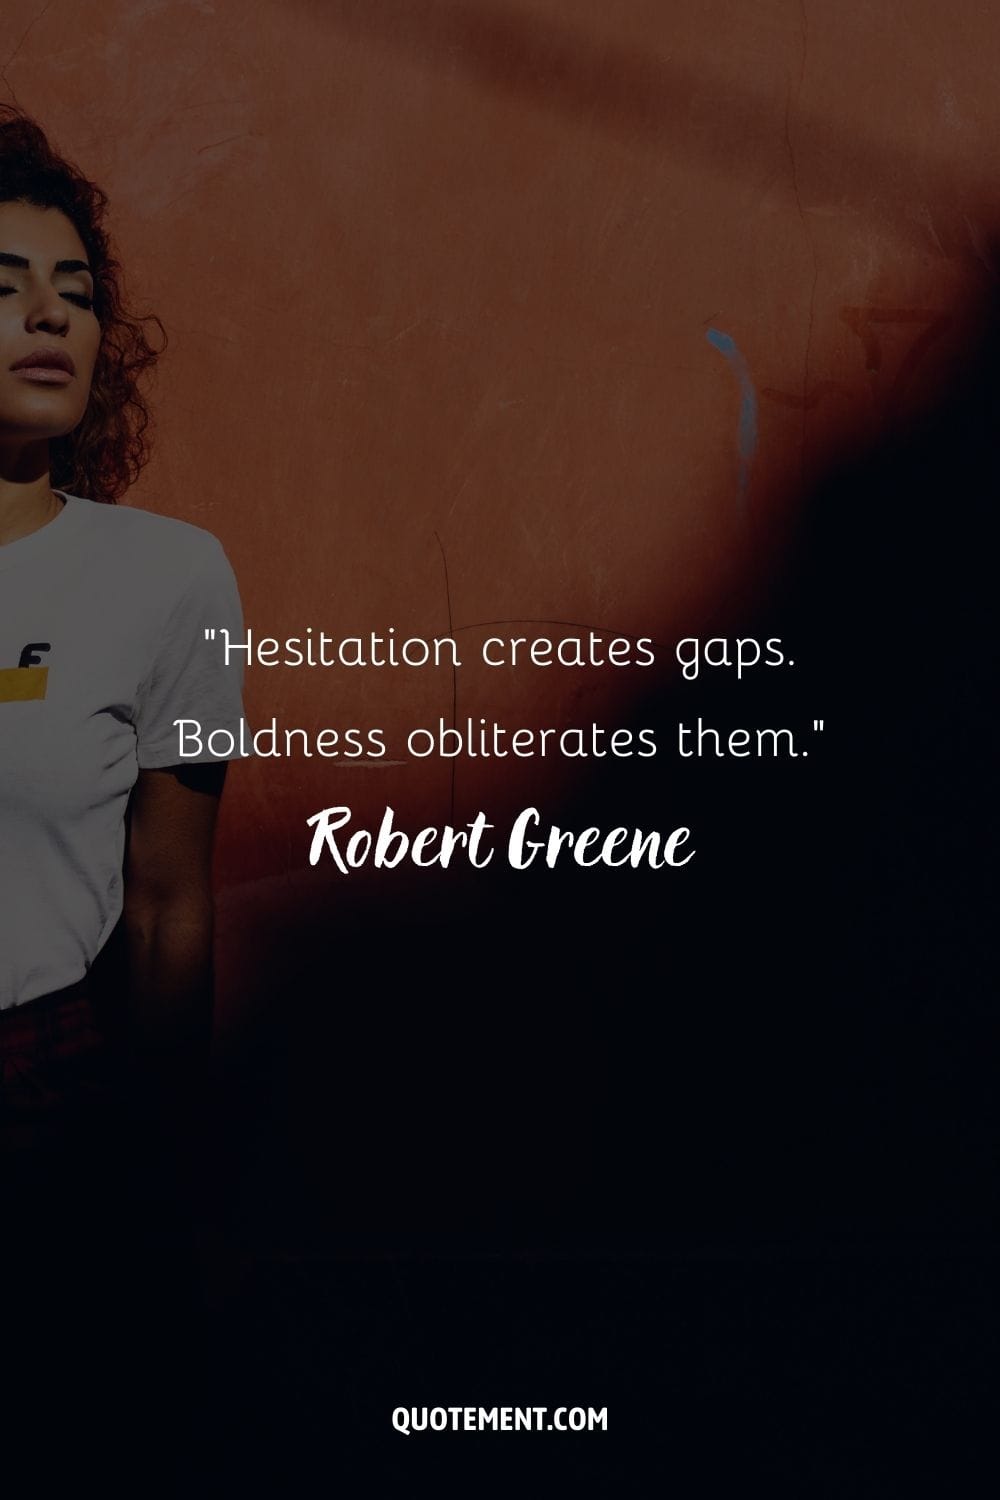 “Hesitation creates gaps. Boldness obliterates them.” ― Robert Greene, The 48 Laws of Power